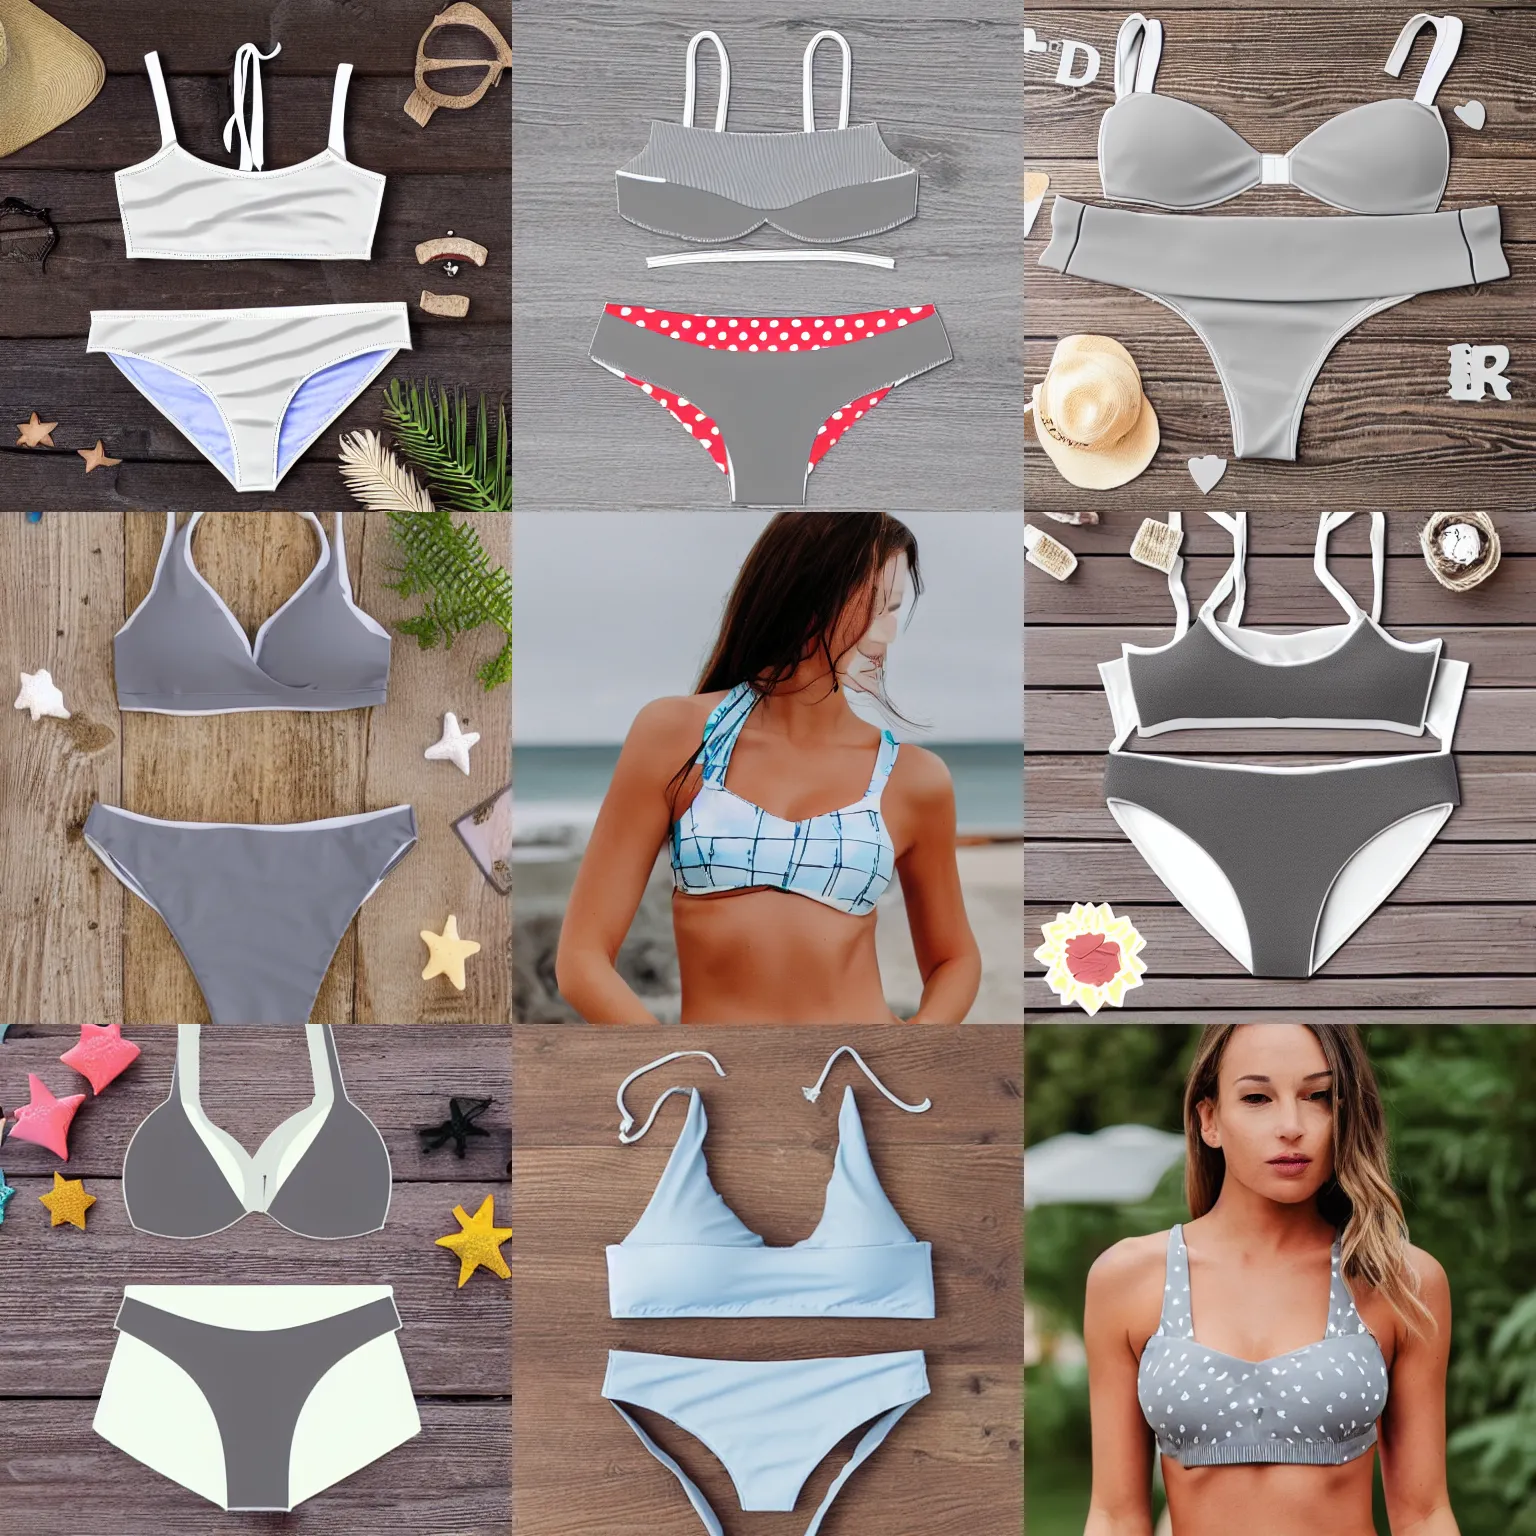 Prompt: cartoon die cut sticker of summer bikini top and bottom on light gray wood